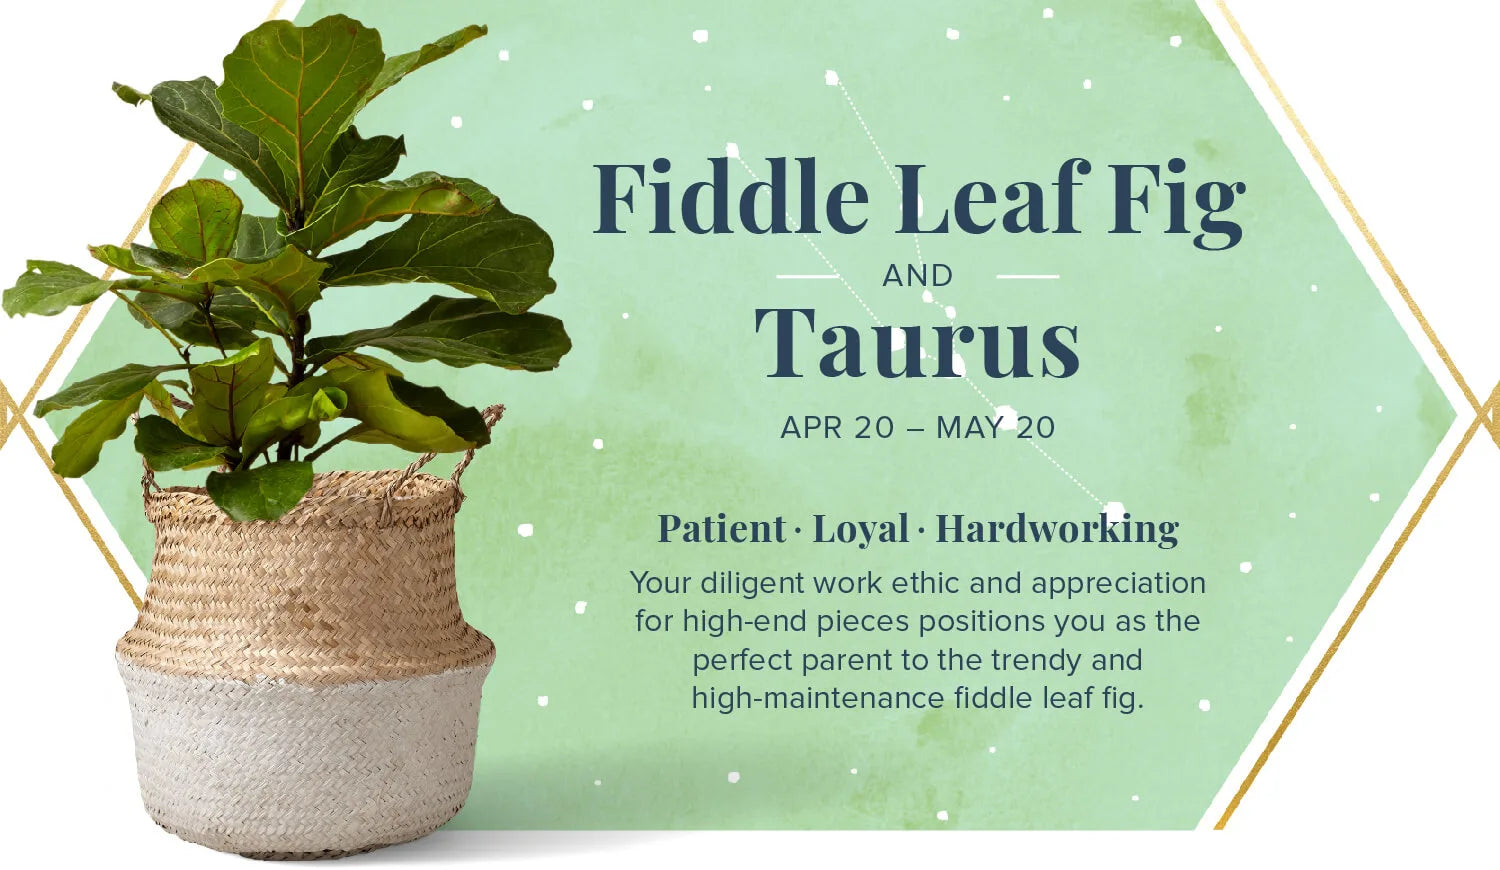 Fiddle Leaf Fig Plant for Taurus or Vrishabha Rashi - Plant